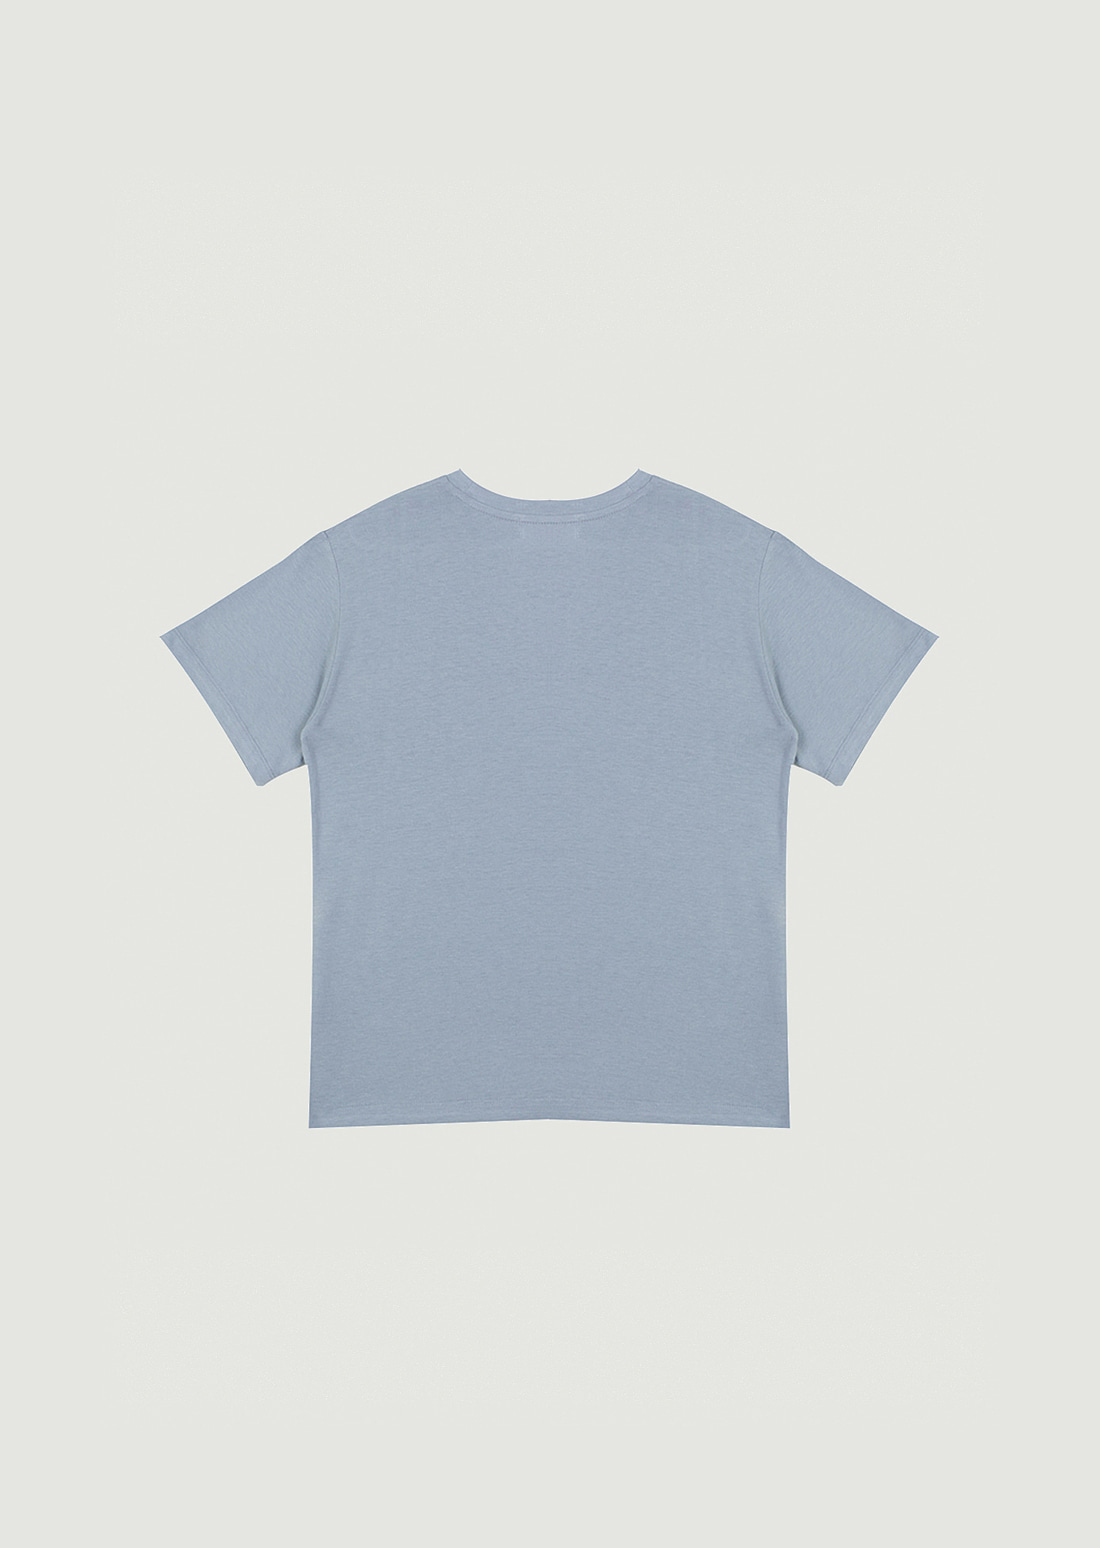 ‘Cafe’ Soft cotton t-shirt (Grey blue)